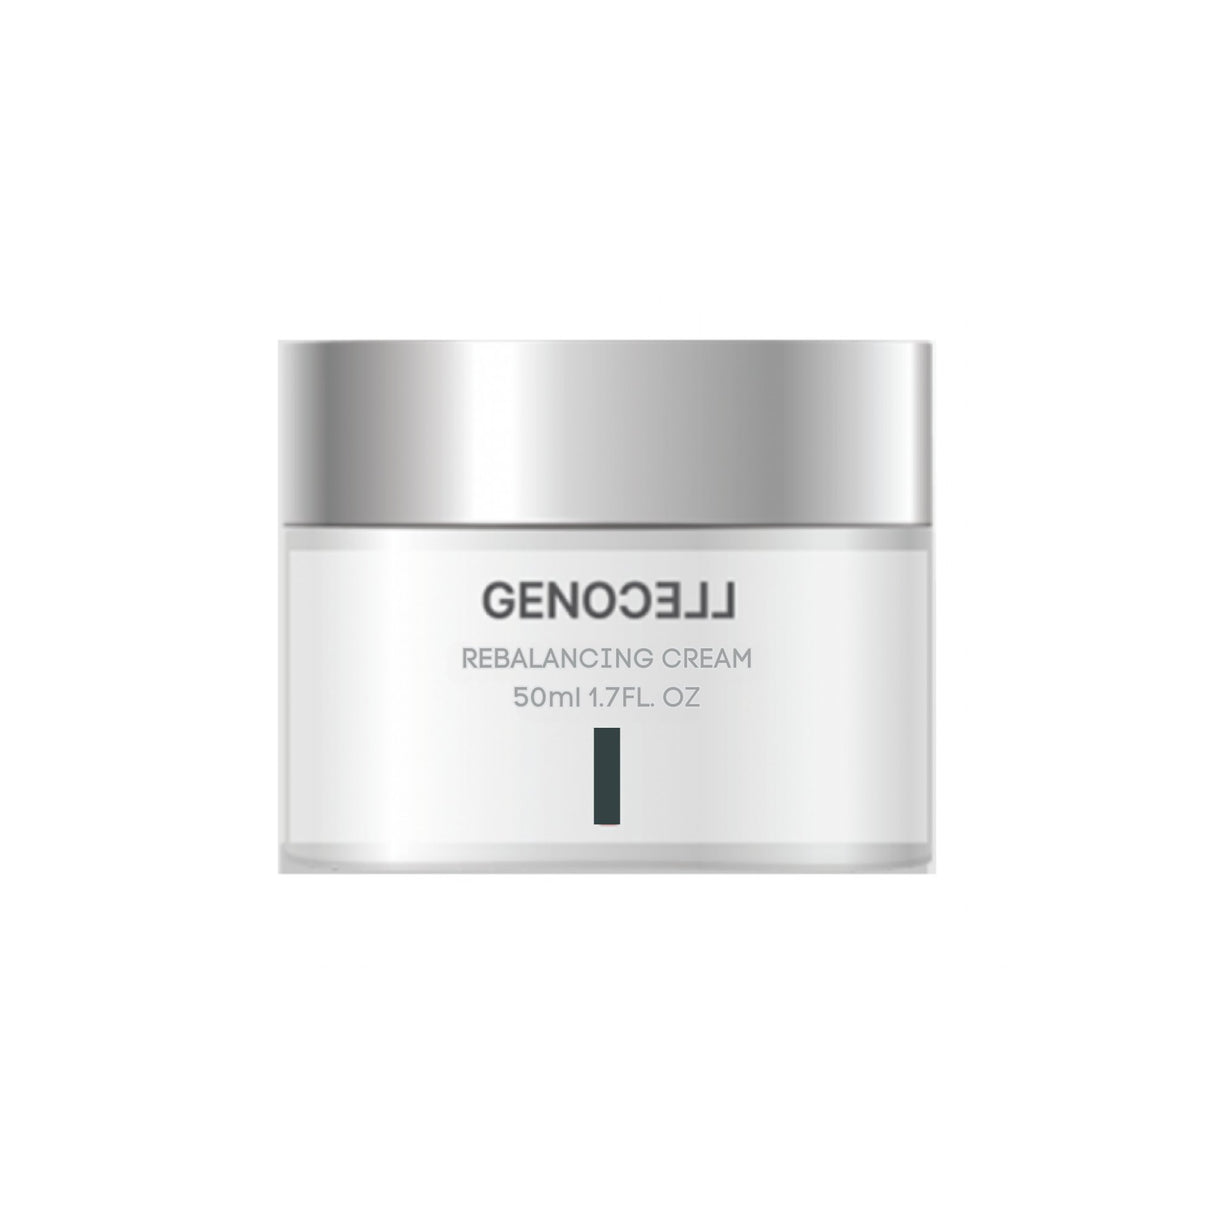 Rebalancing Cream - Filler Lux™ - Facial - Genocell